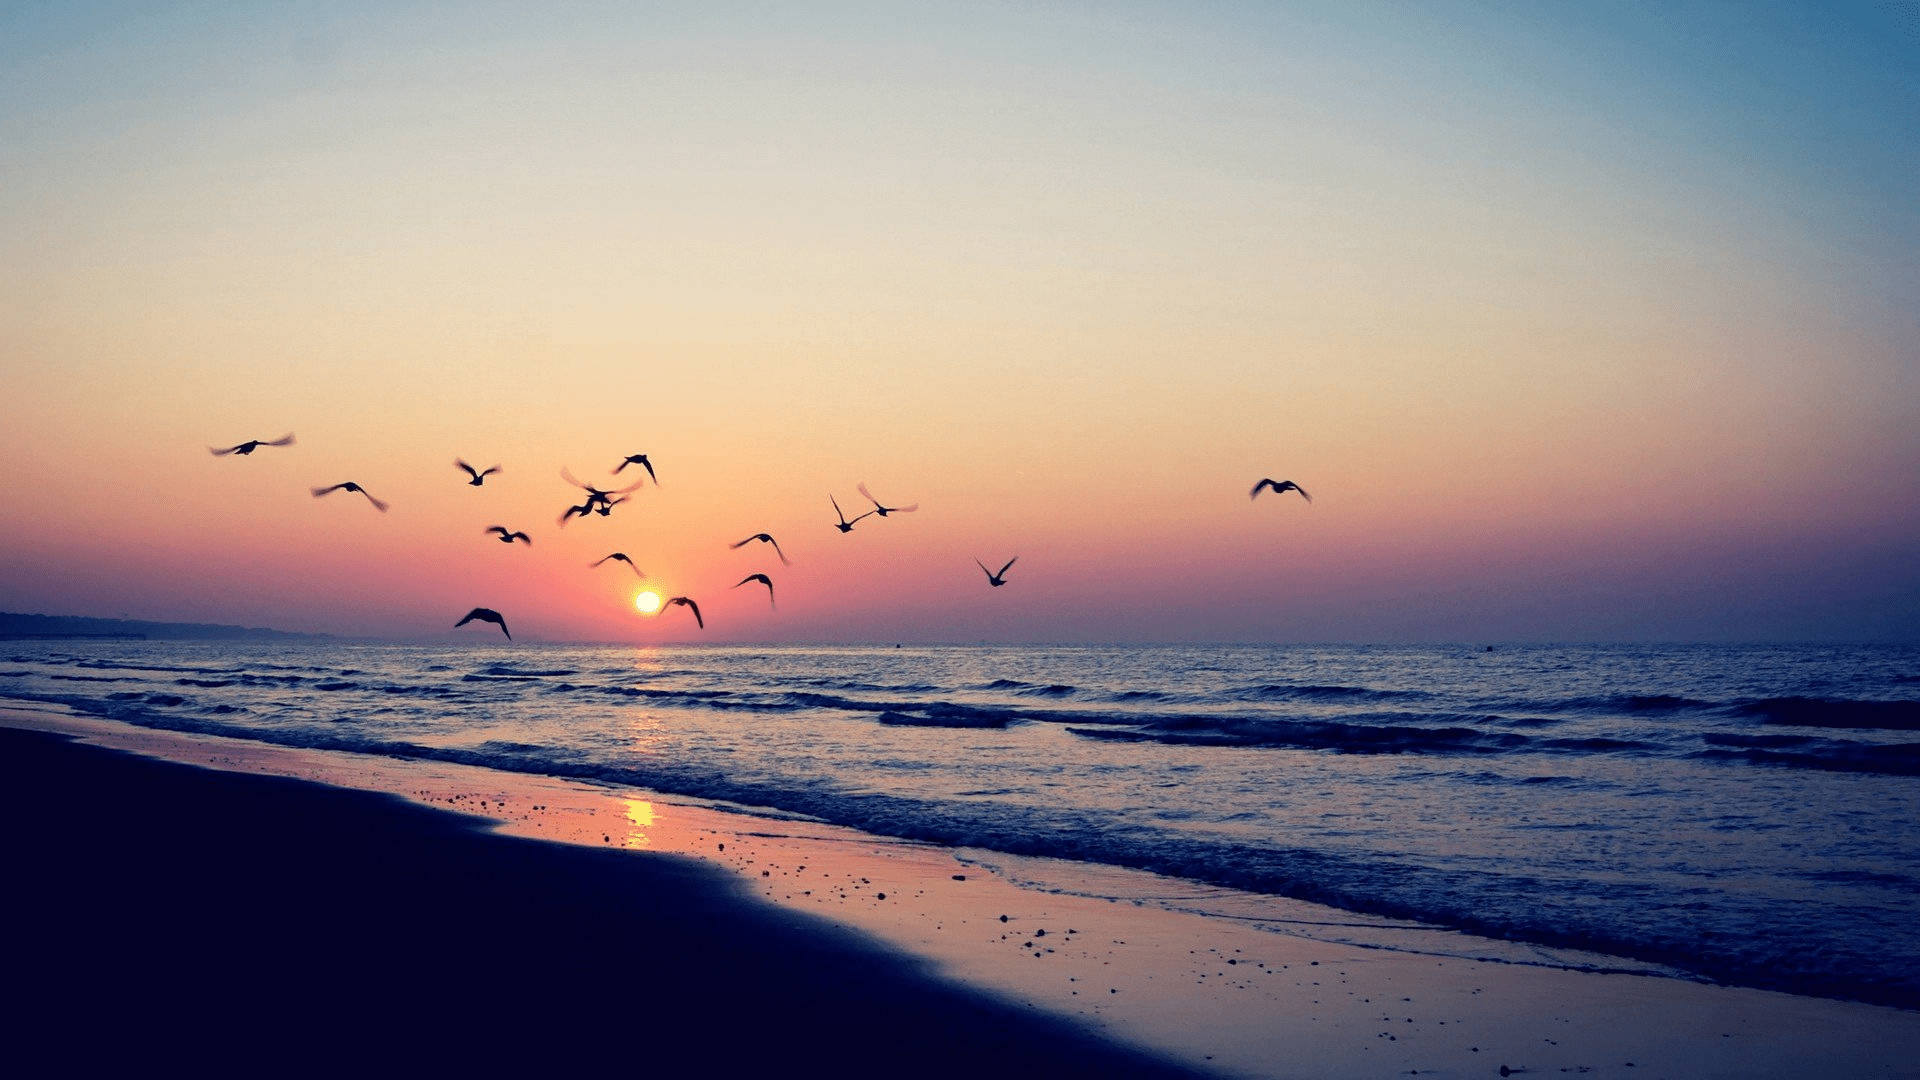 Aesthetic Sunset With Ocean Birds Wallpaper